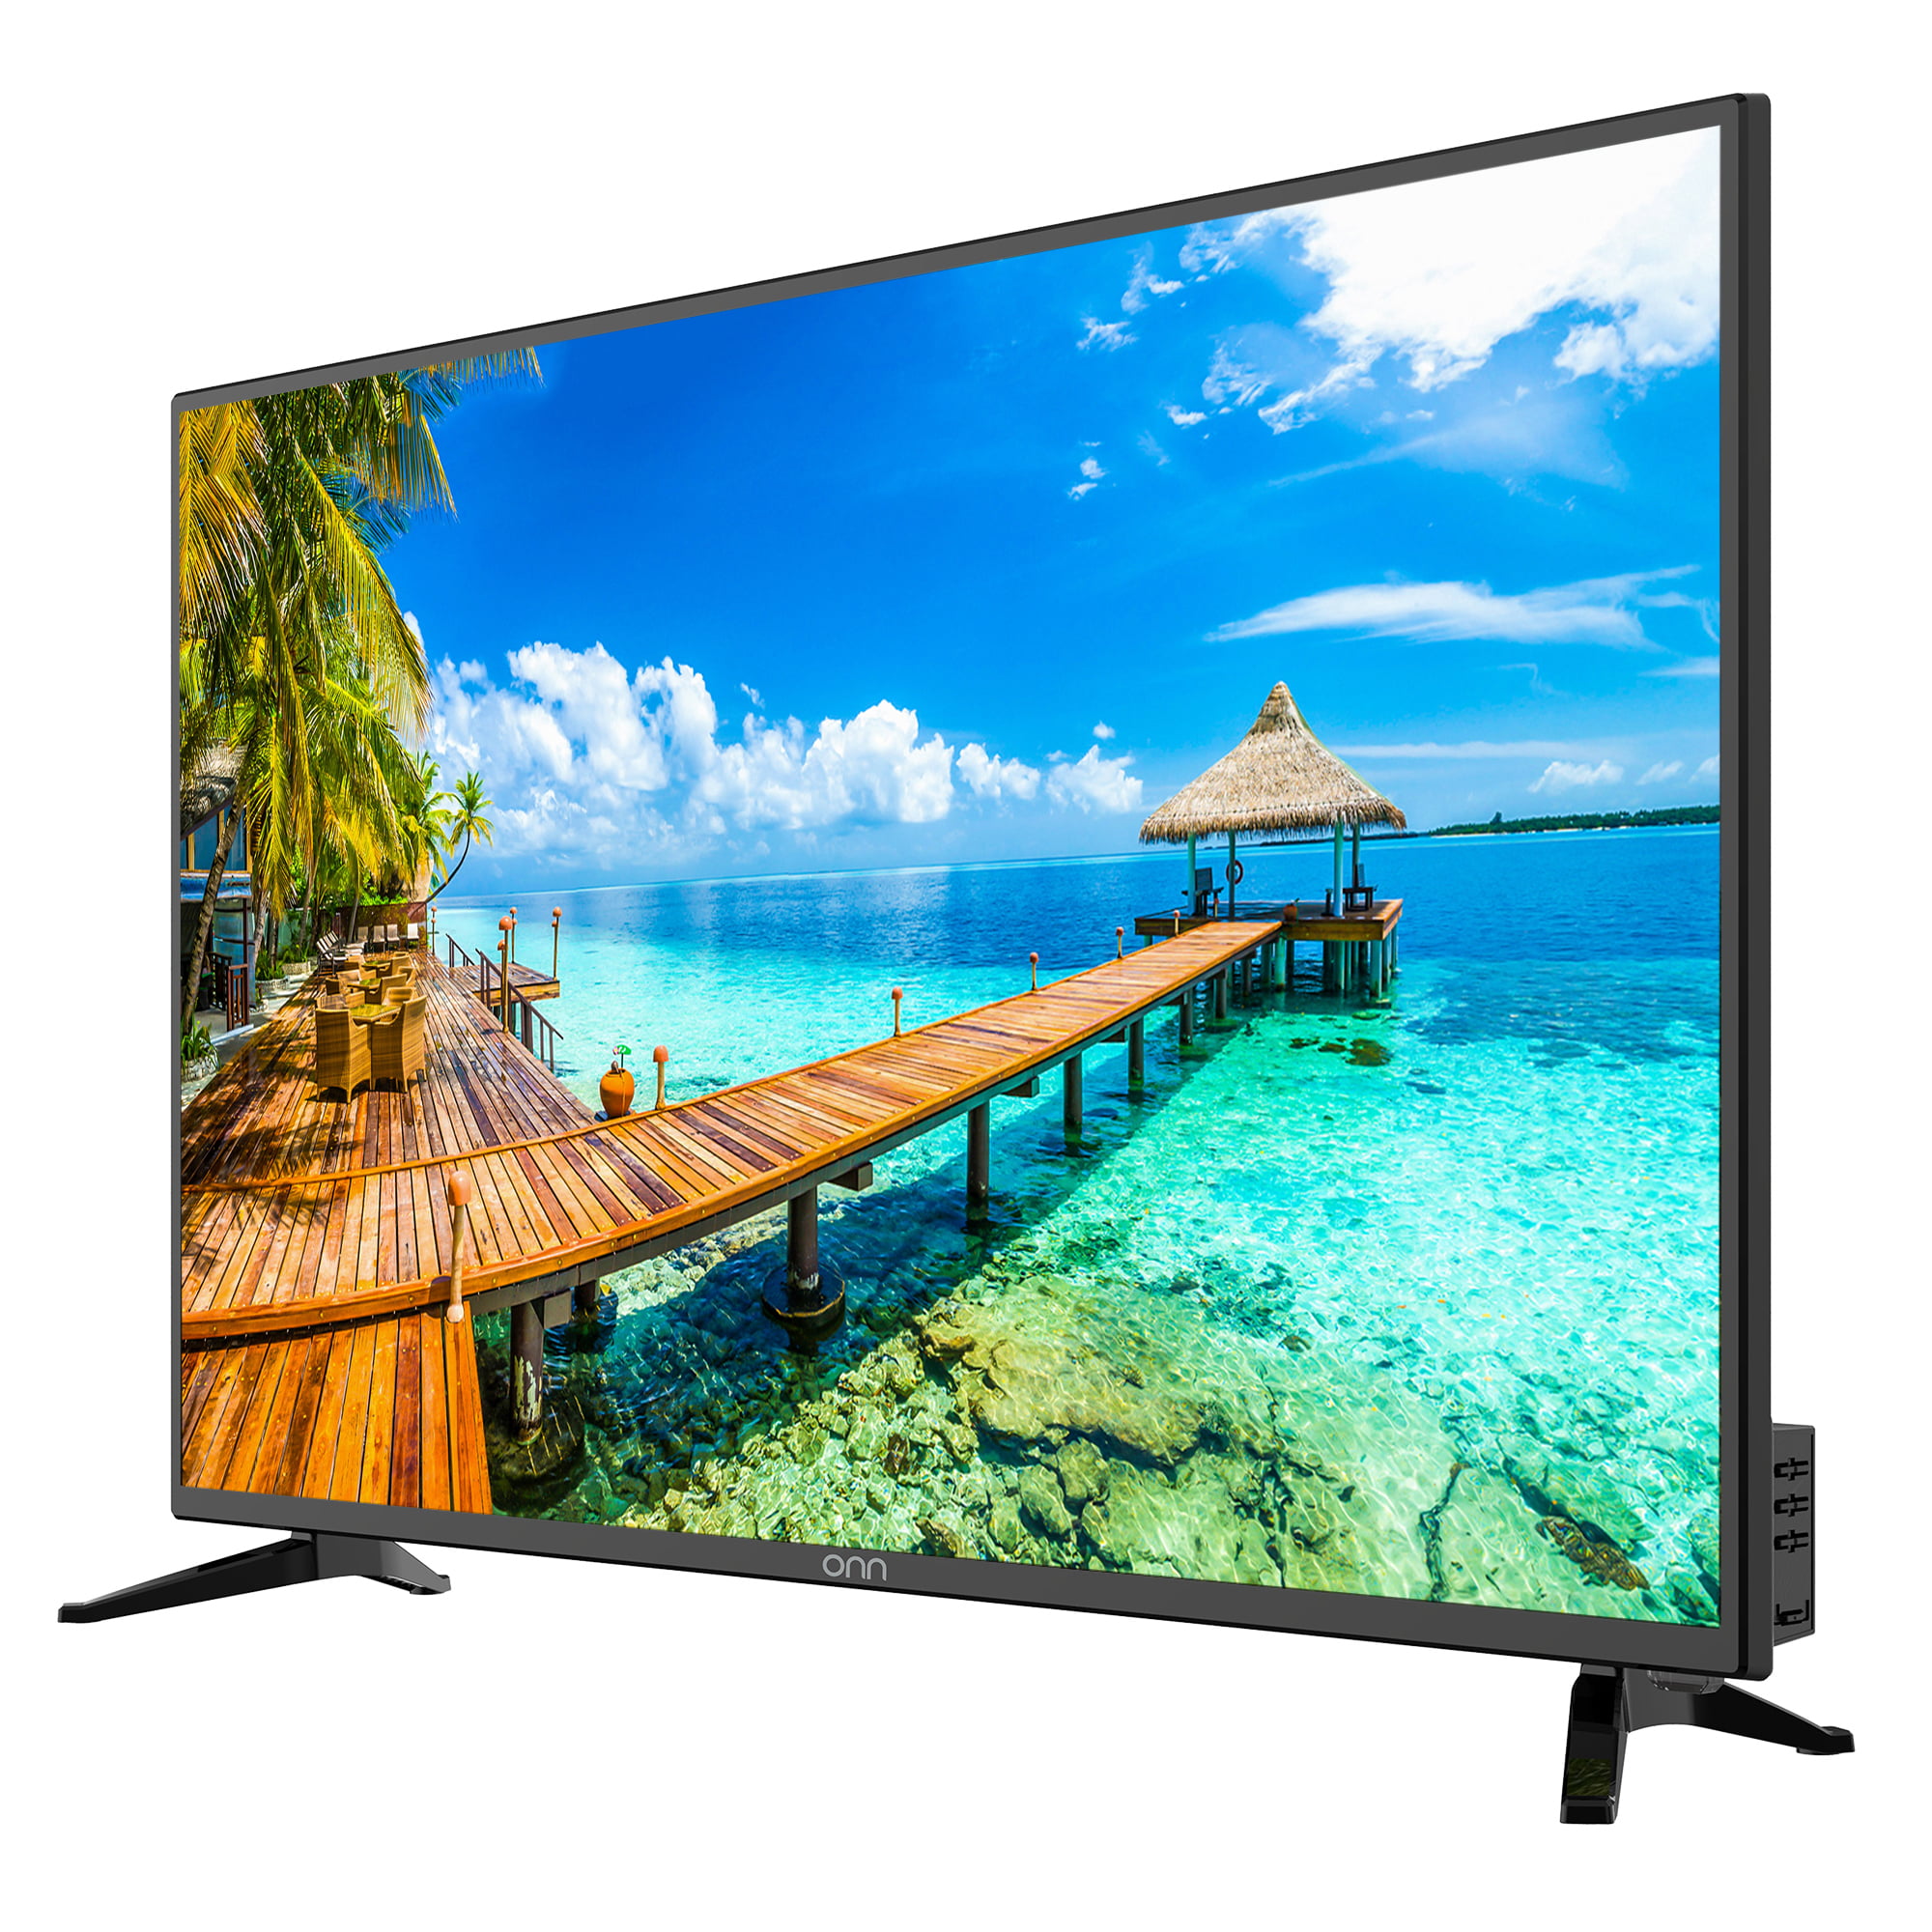 ONN Smart TV de 50 Pulgadas UHD 4K, Modelo ONN-50R con LED y Roku TV